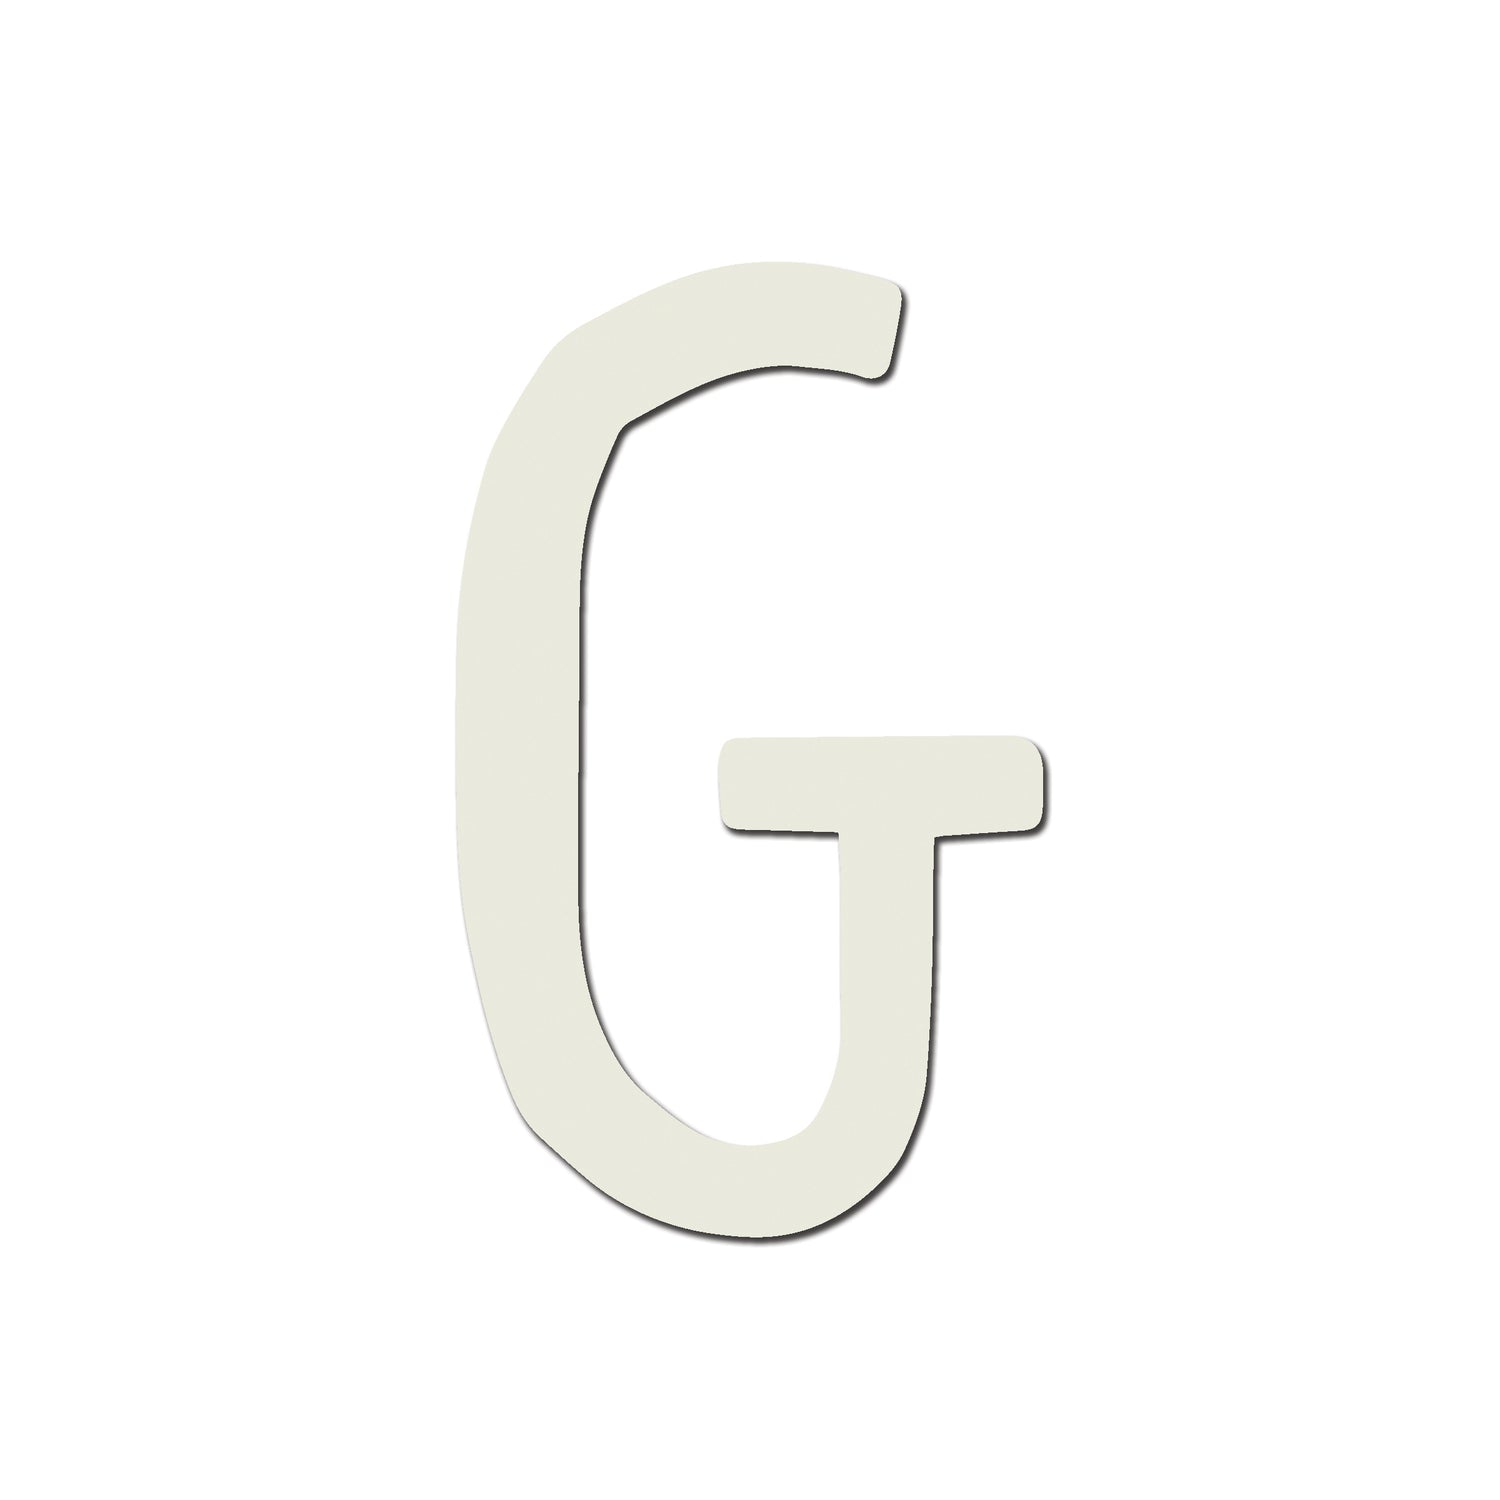 Alphabet Magnets | Uppercase Letters